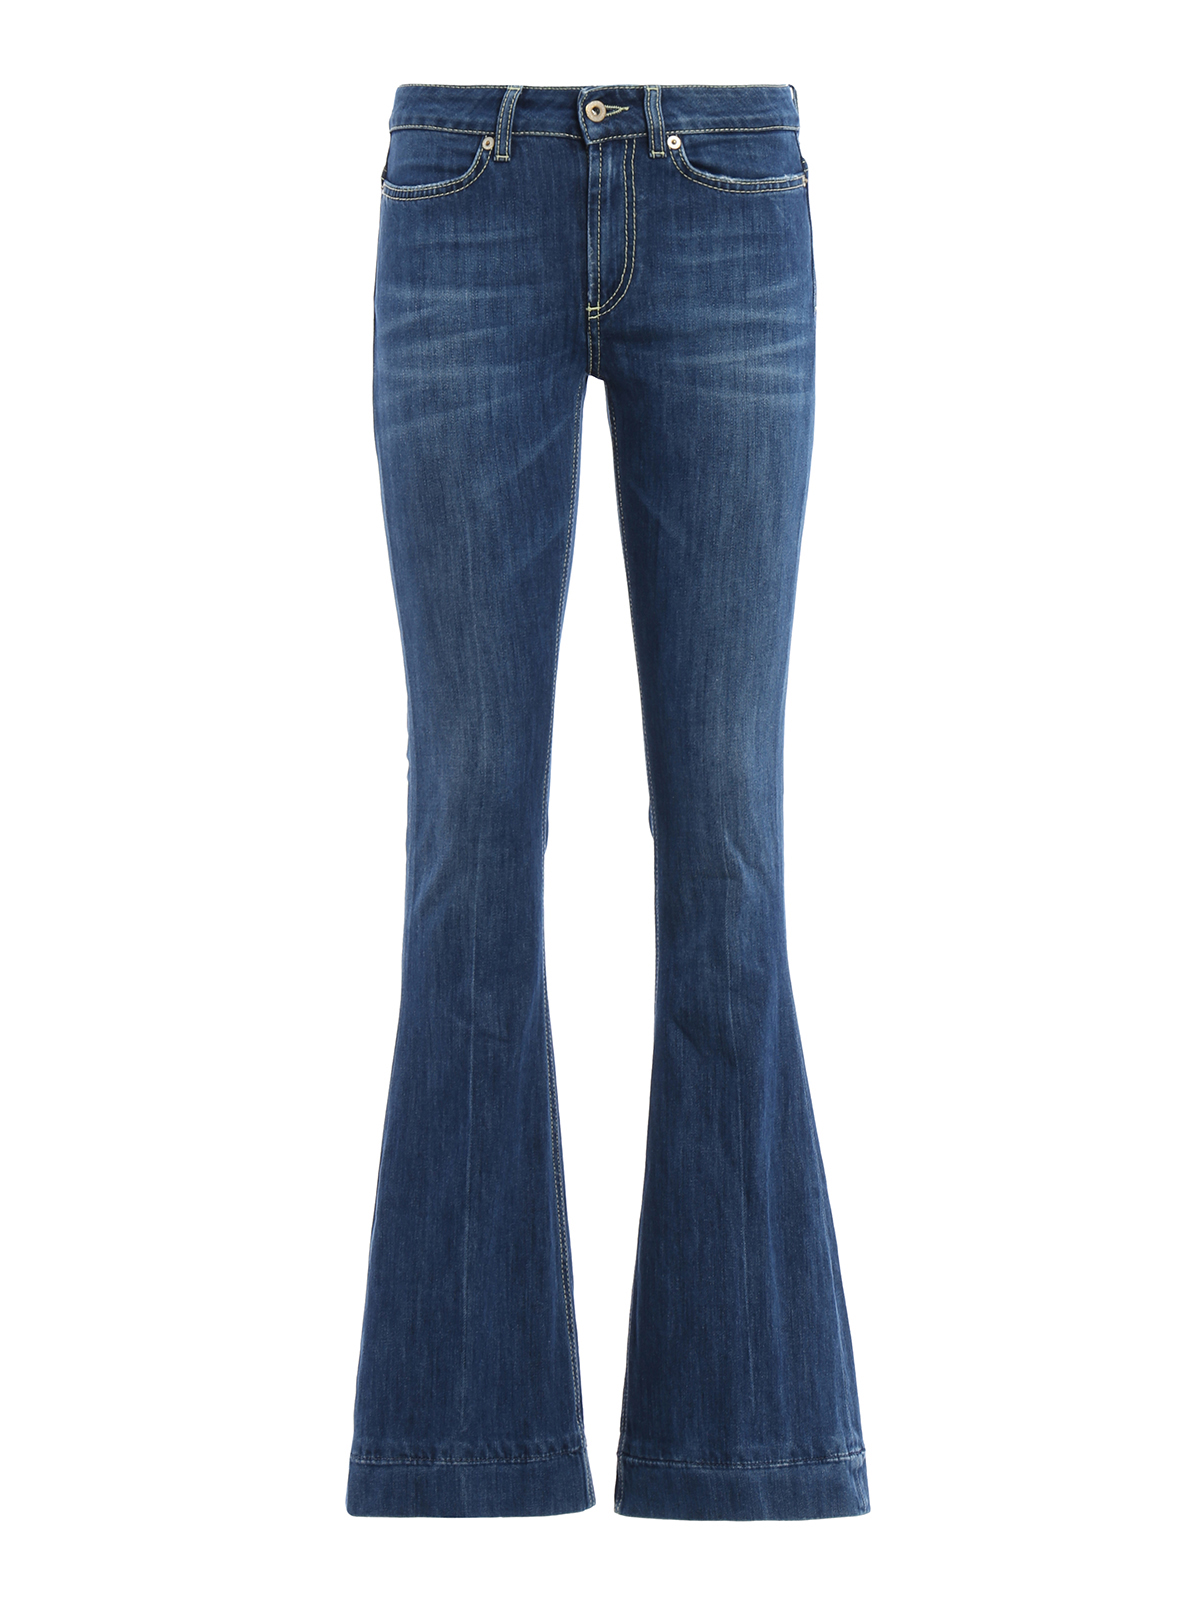 Flared jeans Dondup - Akon jeans - DP241DS107D800 | Shop online at iKRIX